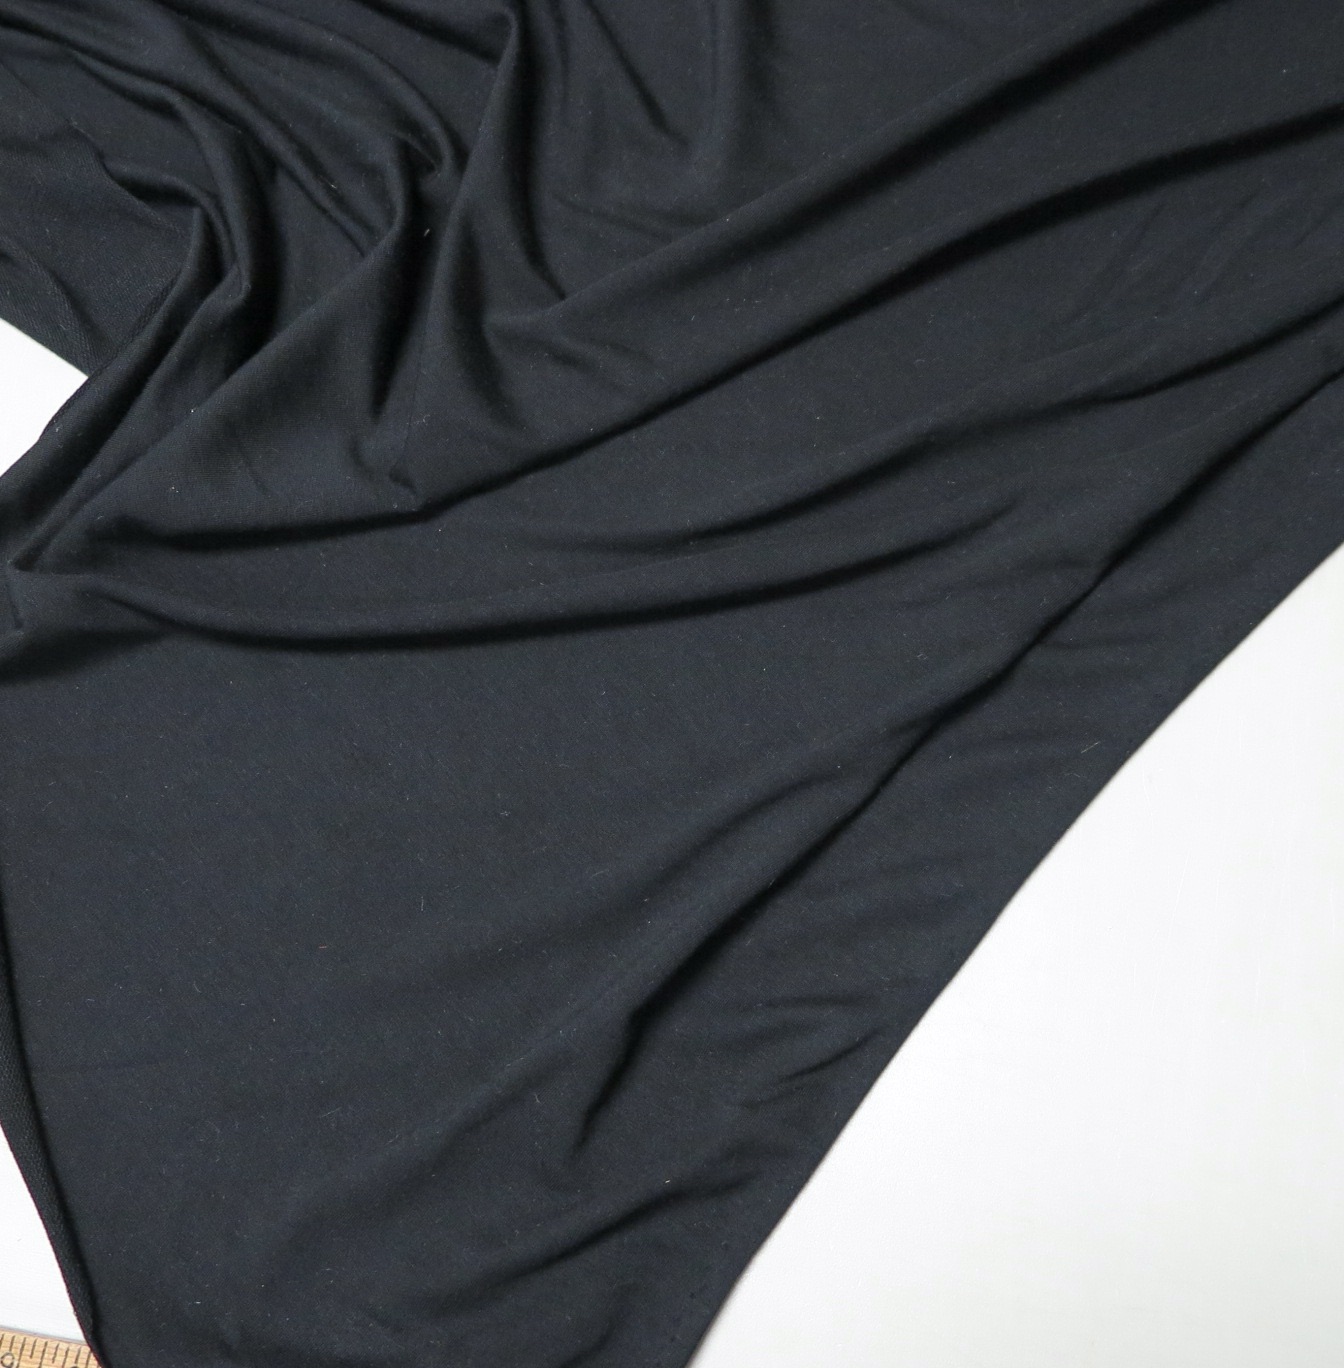 Micro modal jersey - black, Knitted modal fabrics